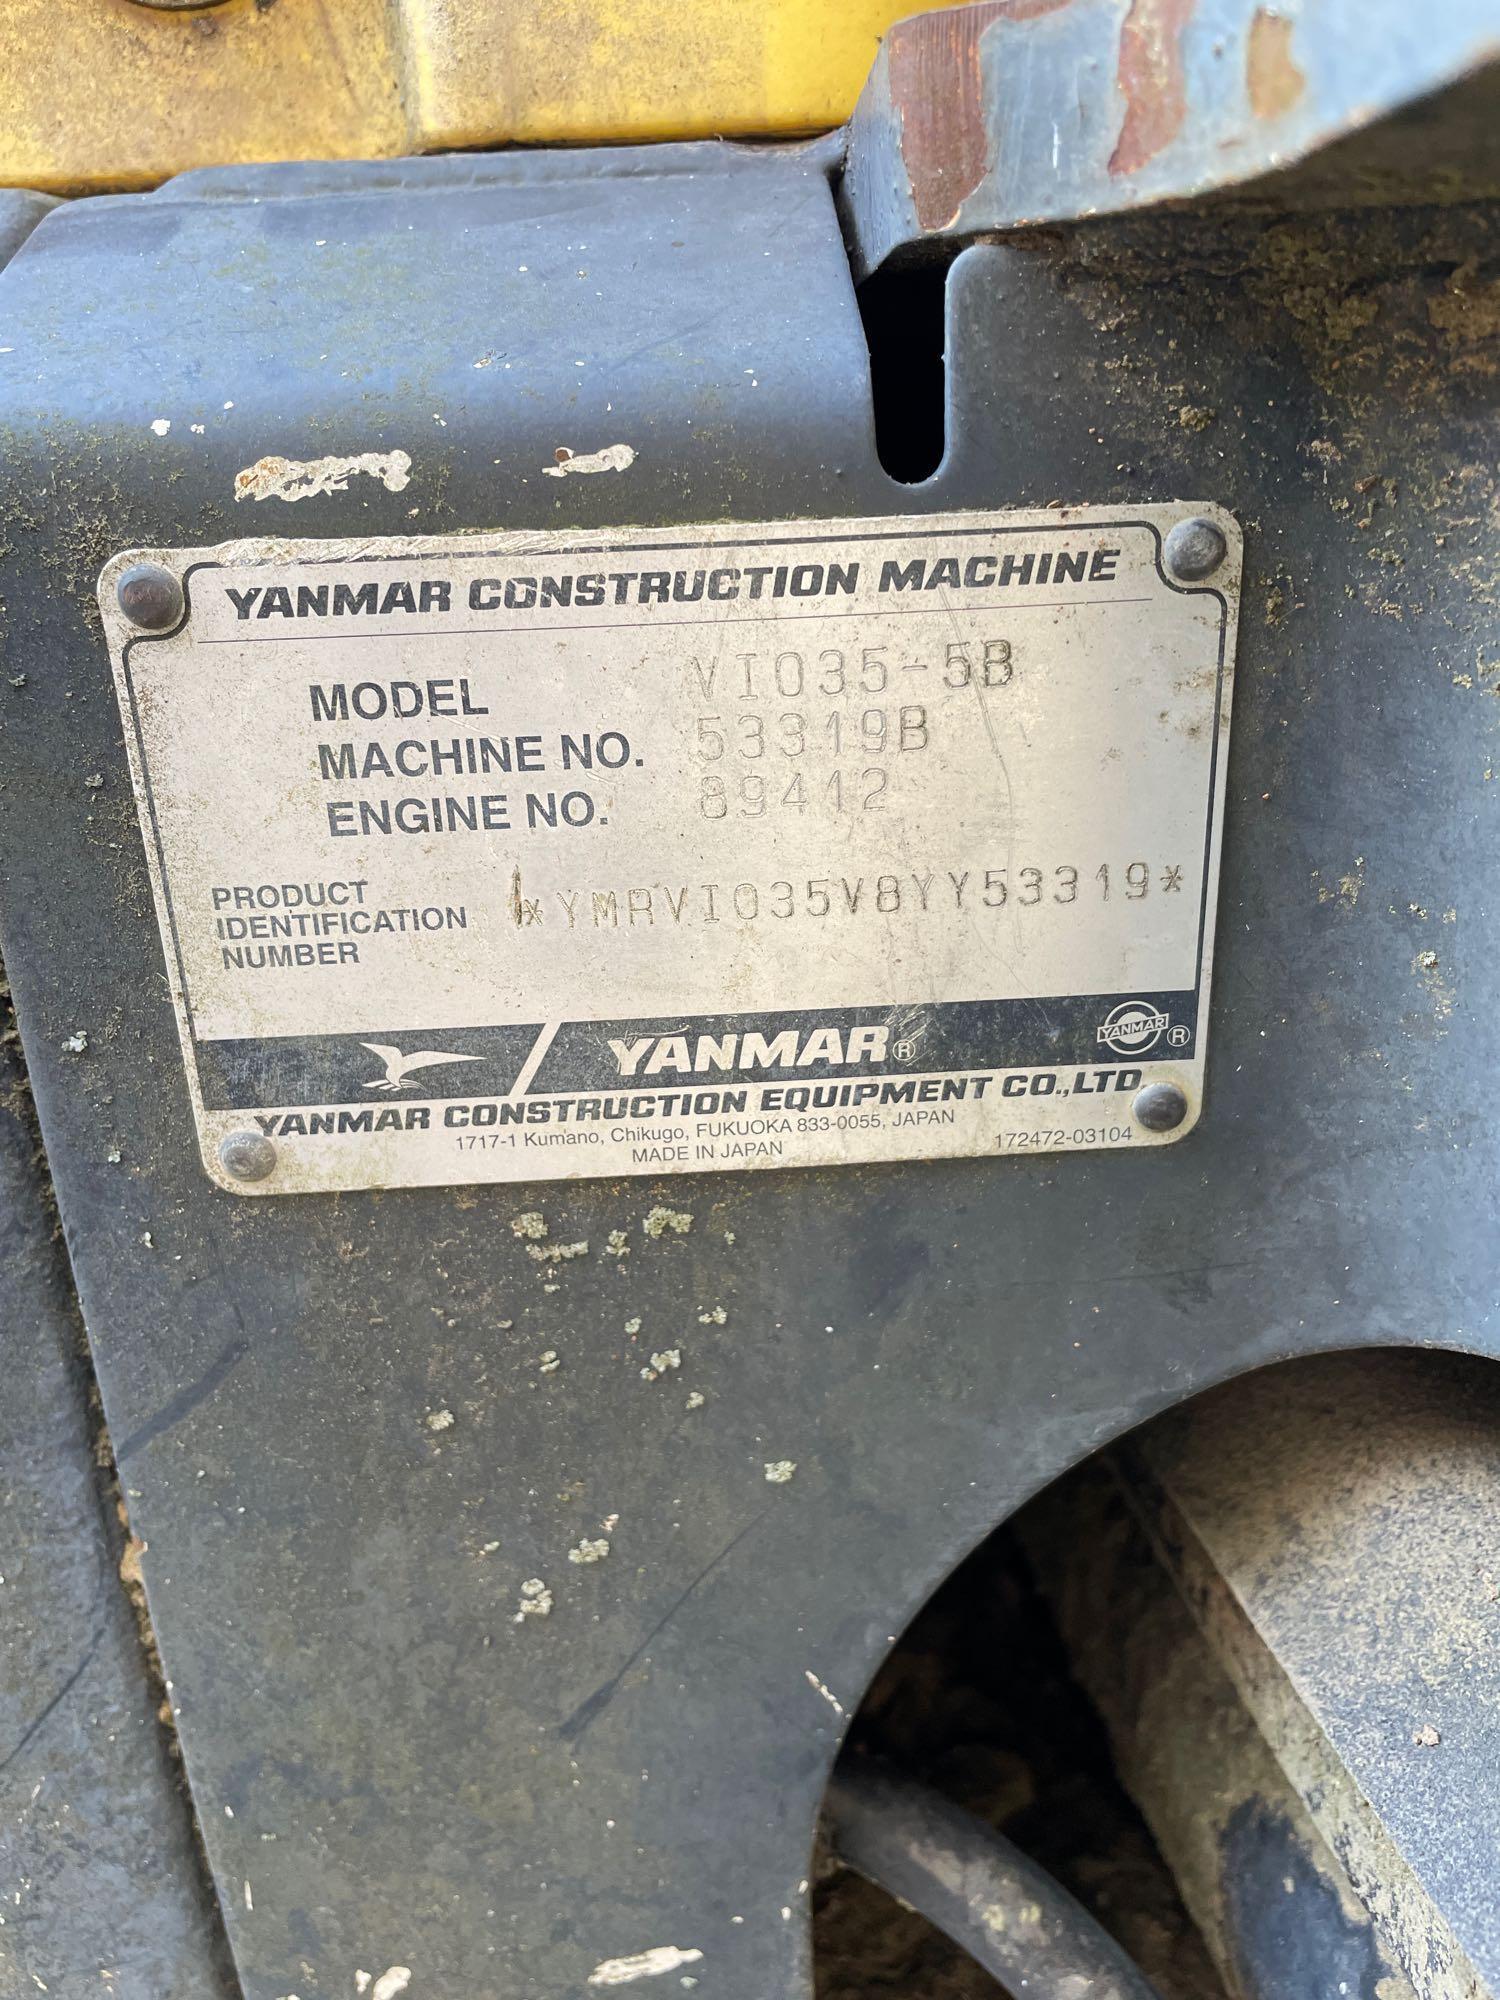 YANMAR VI035-5B Mini Excavator